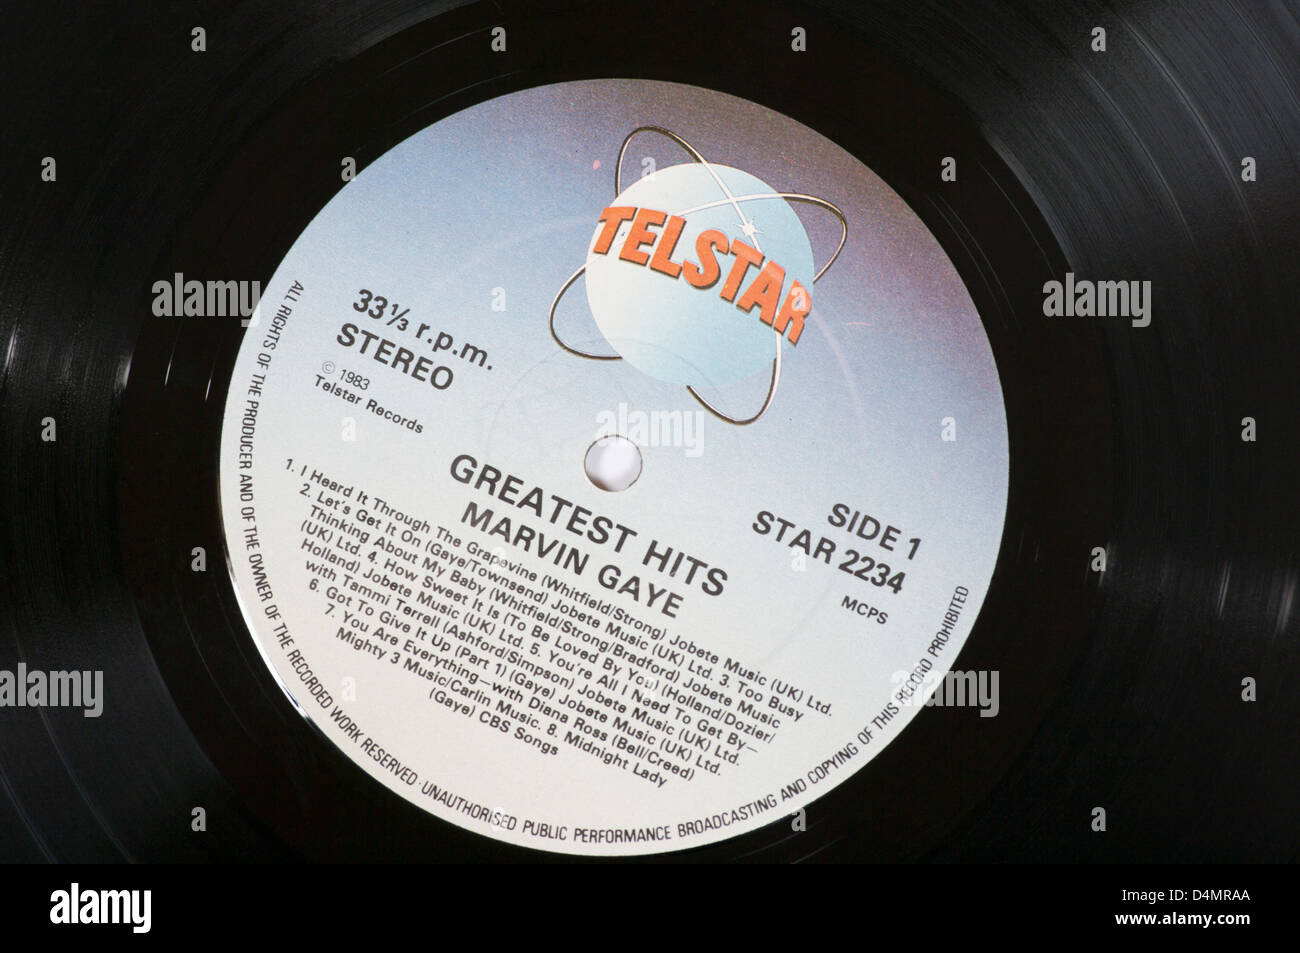 Telstar Record Label On A Vinyl LP Record Stock Photo